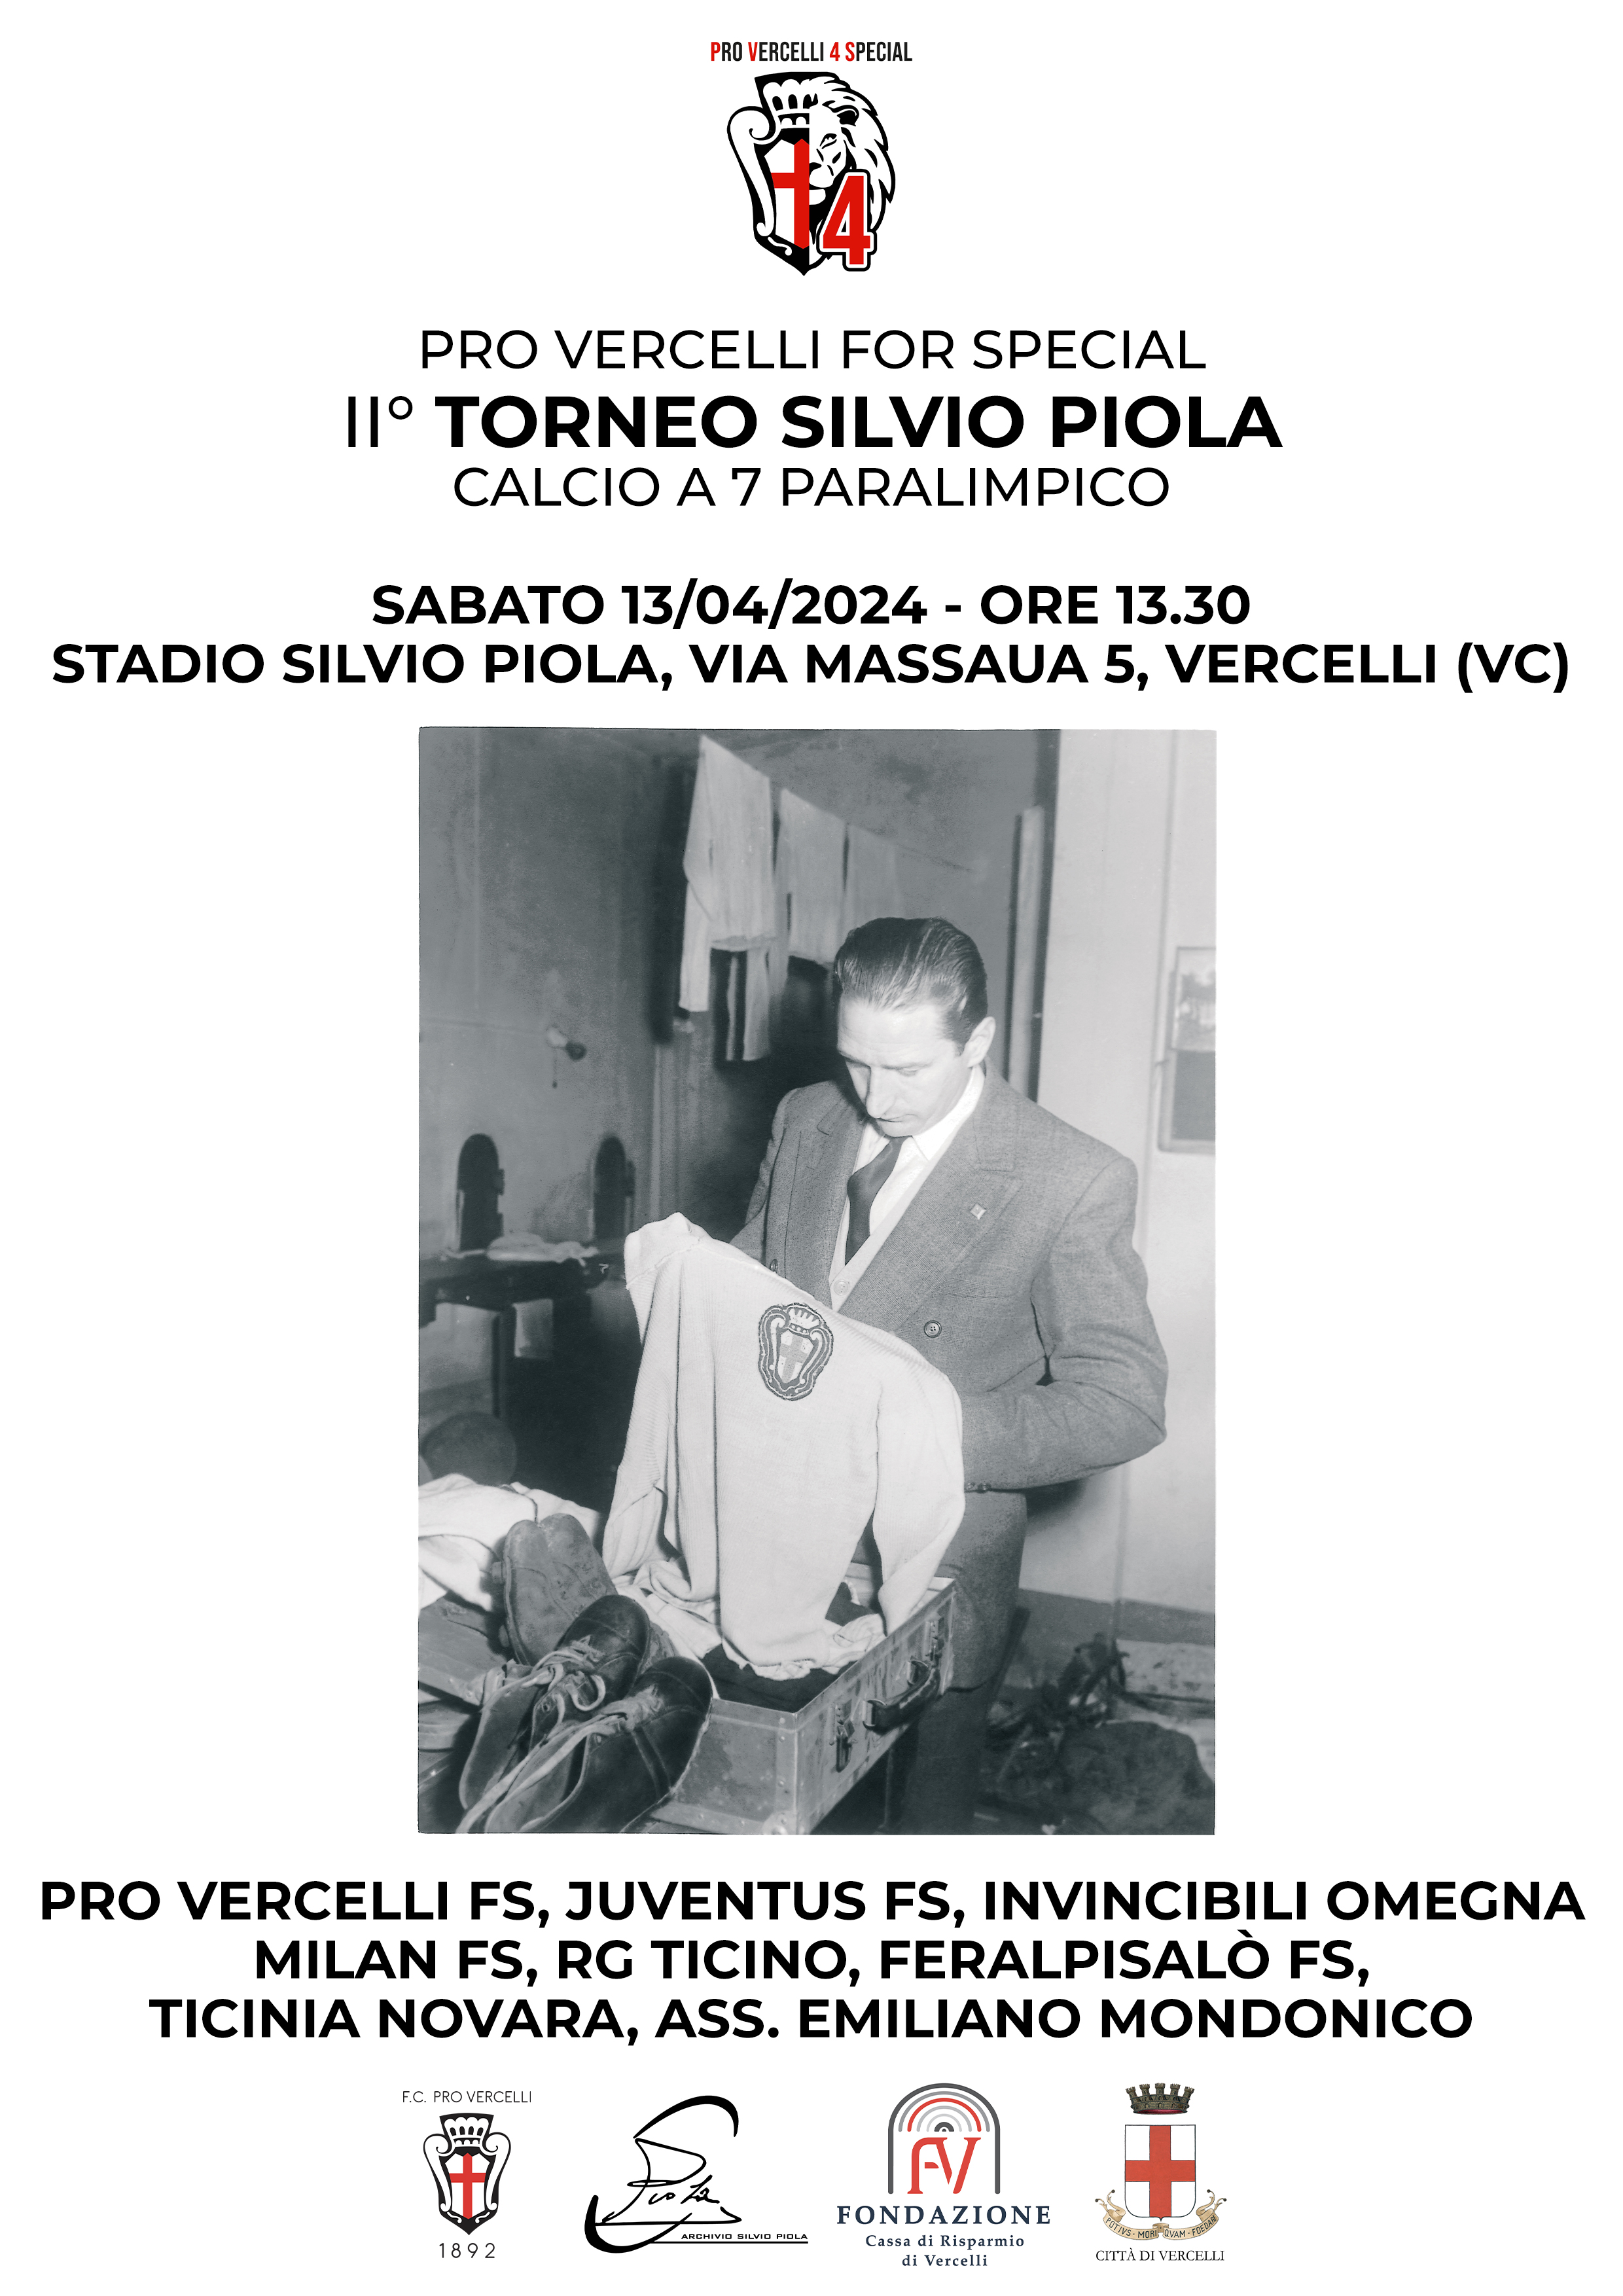 II TORNEO SILVIO PIOLA FOR SPECIAL